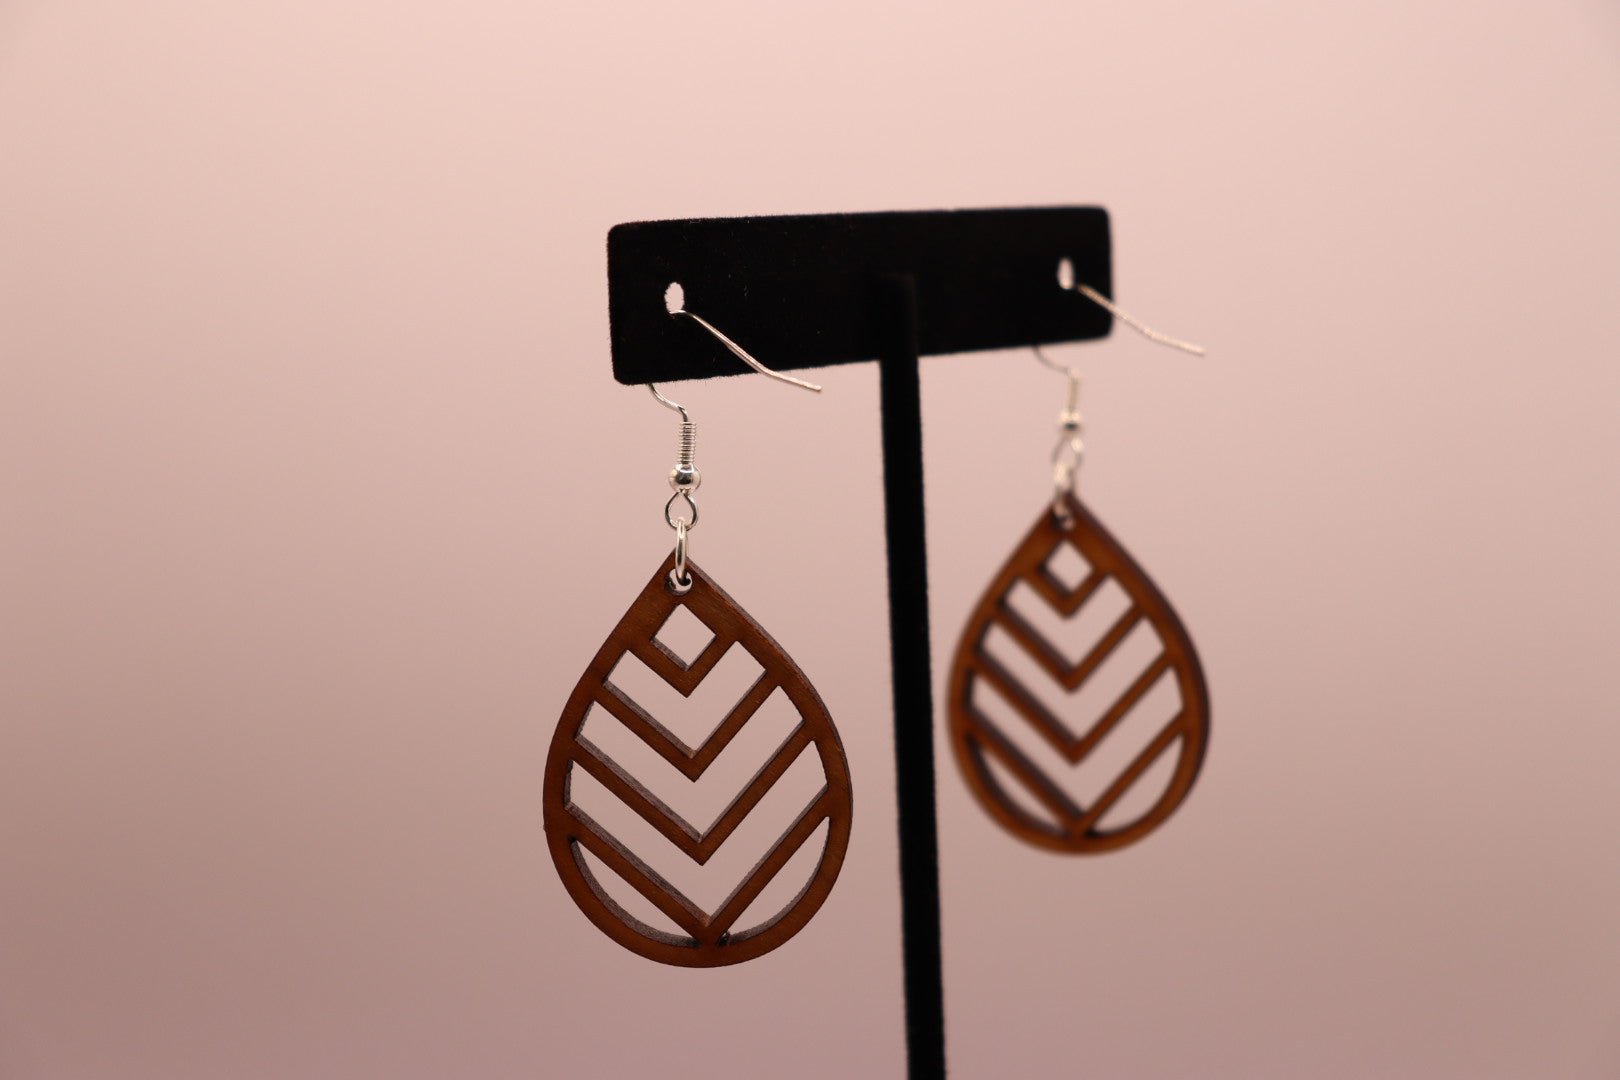 Cherry wood handmade earrings